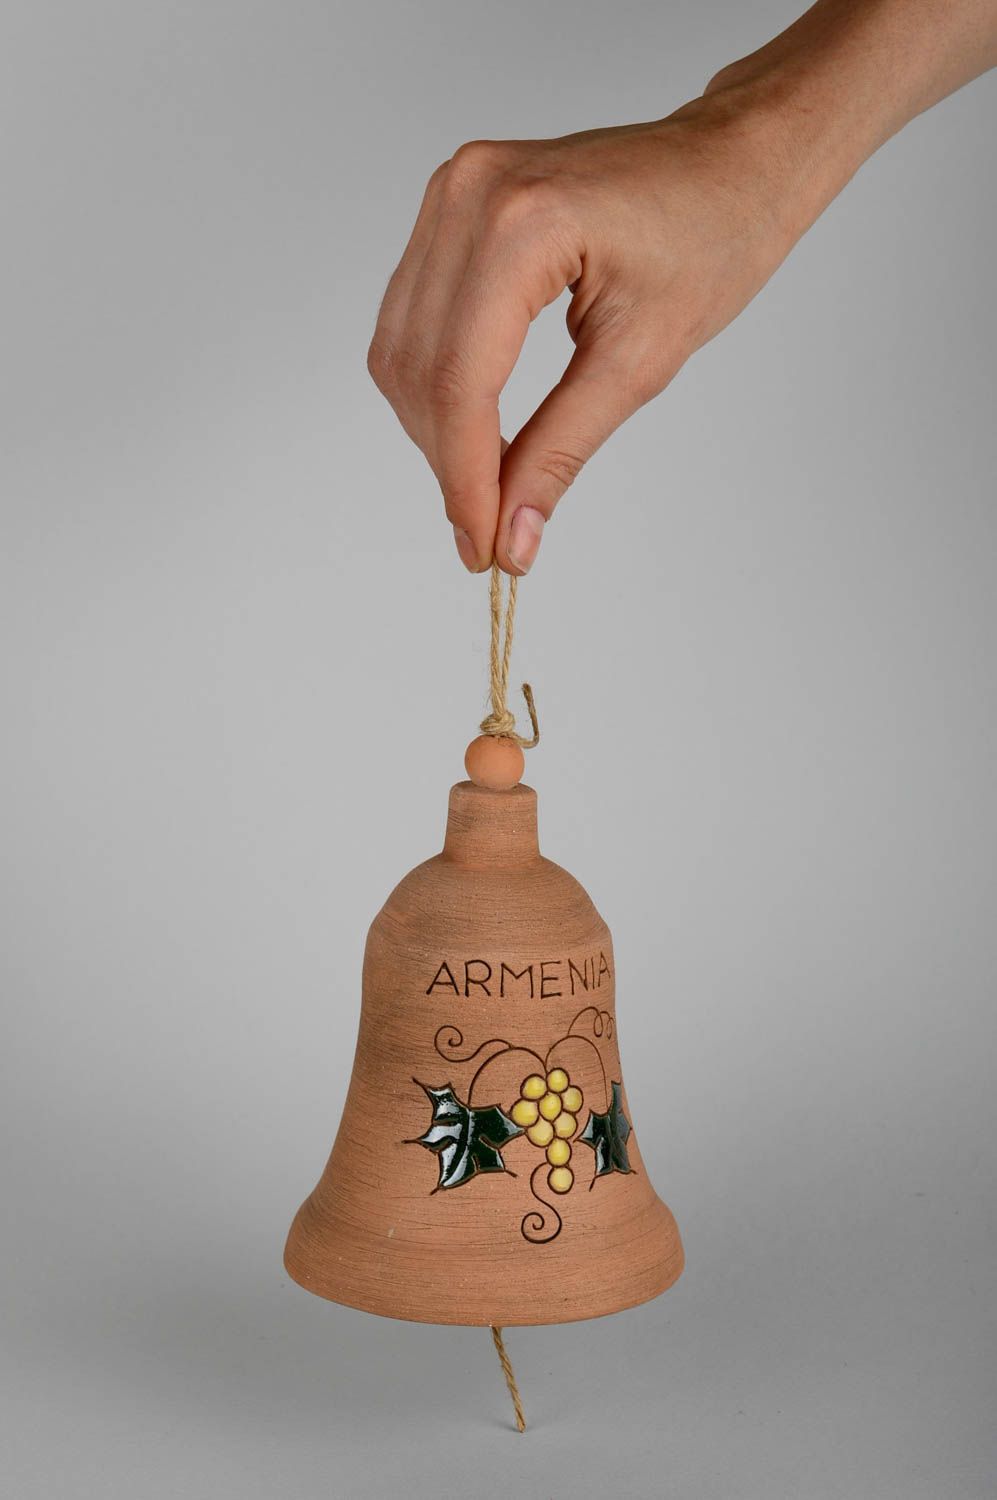 Handmade bell designer bell clay bell unusual souvenir ceramic bell gift ideas photo 5